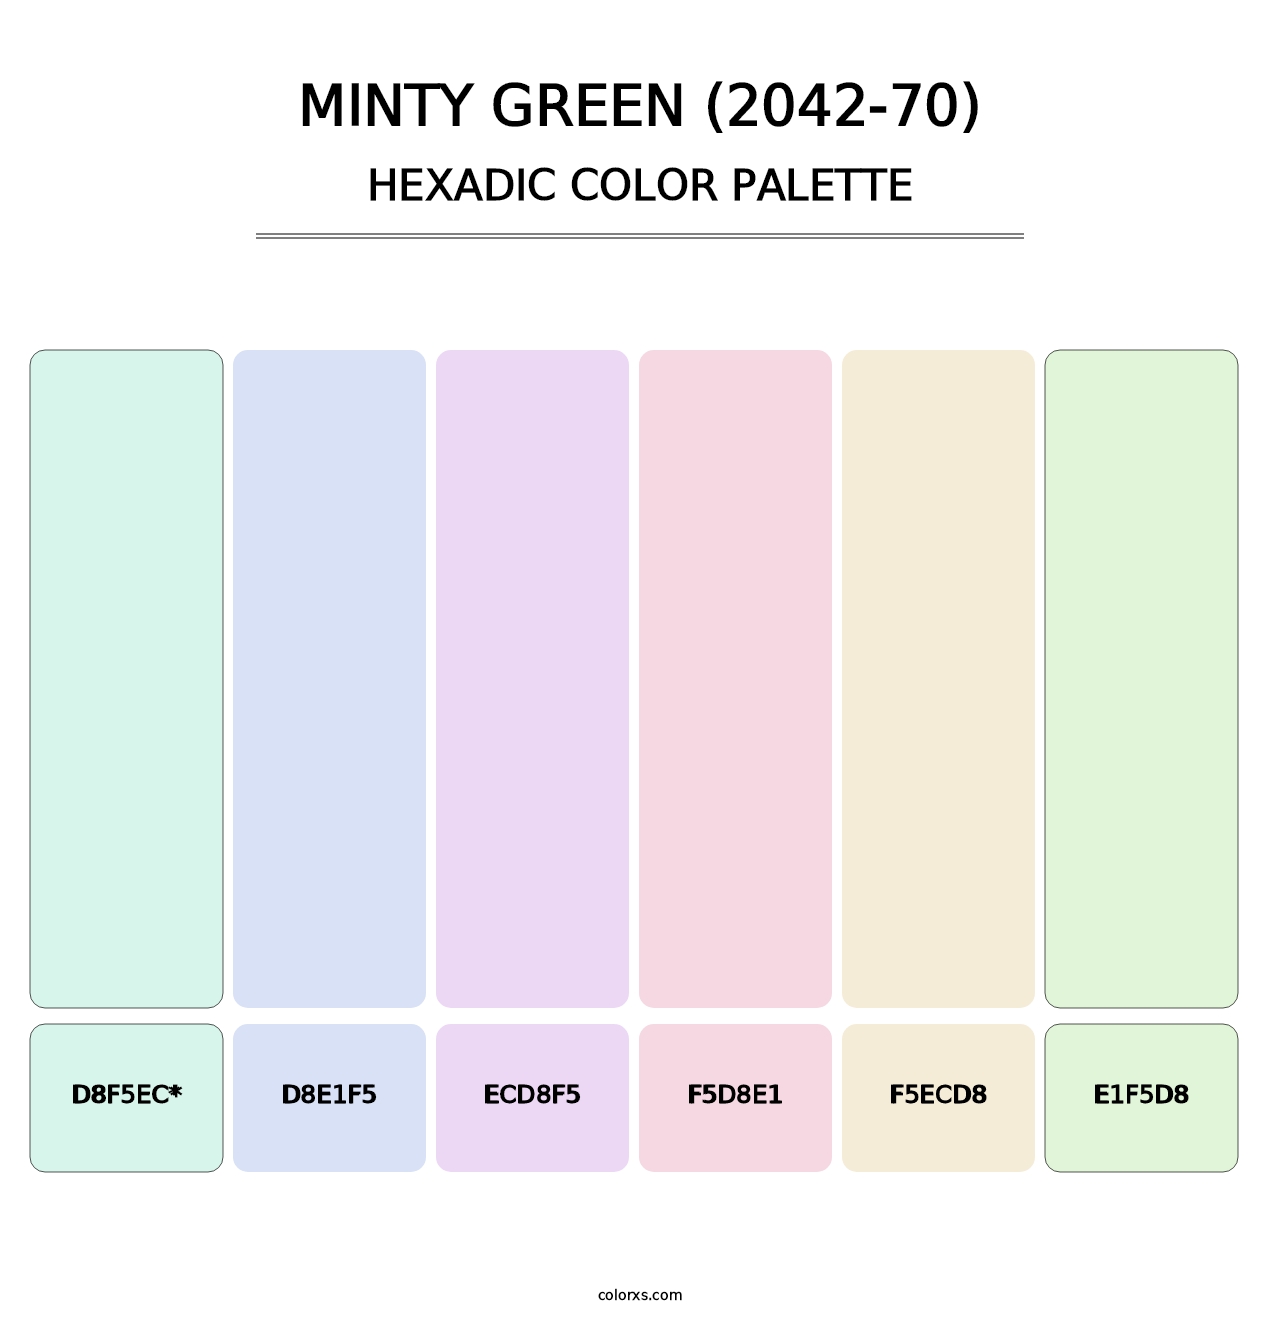 Minty Green (2042-70) - Hexadic Color Palette